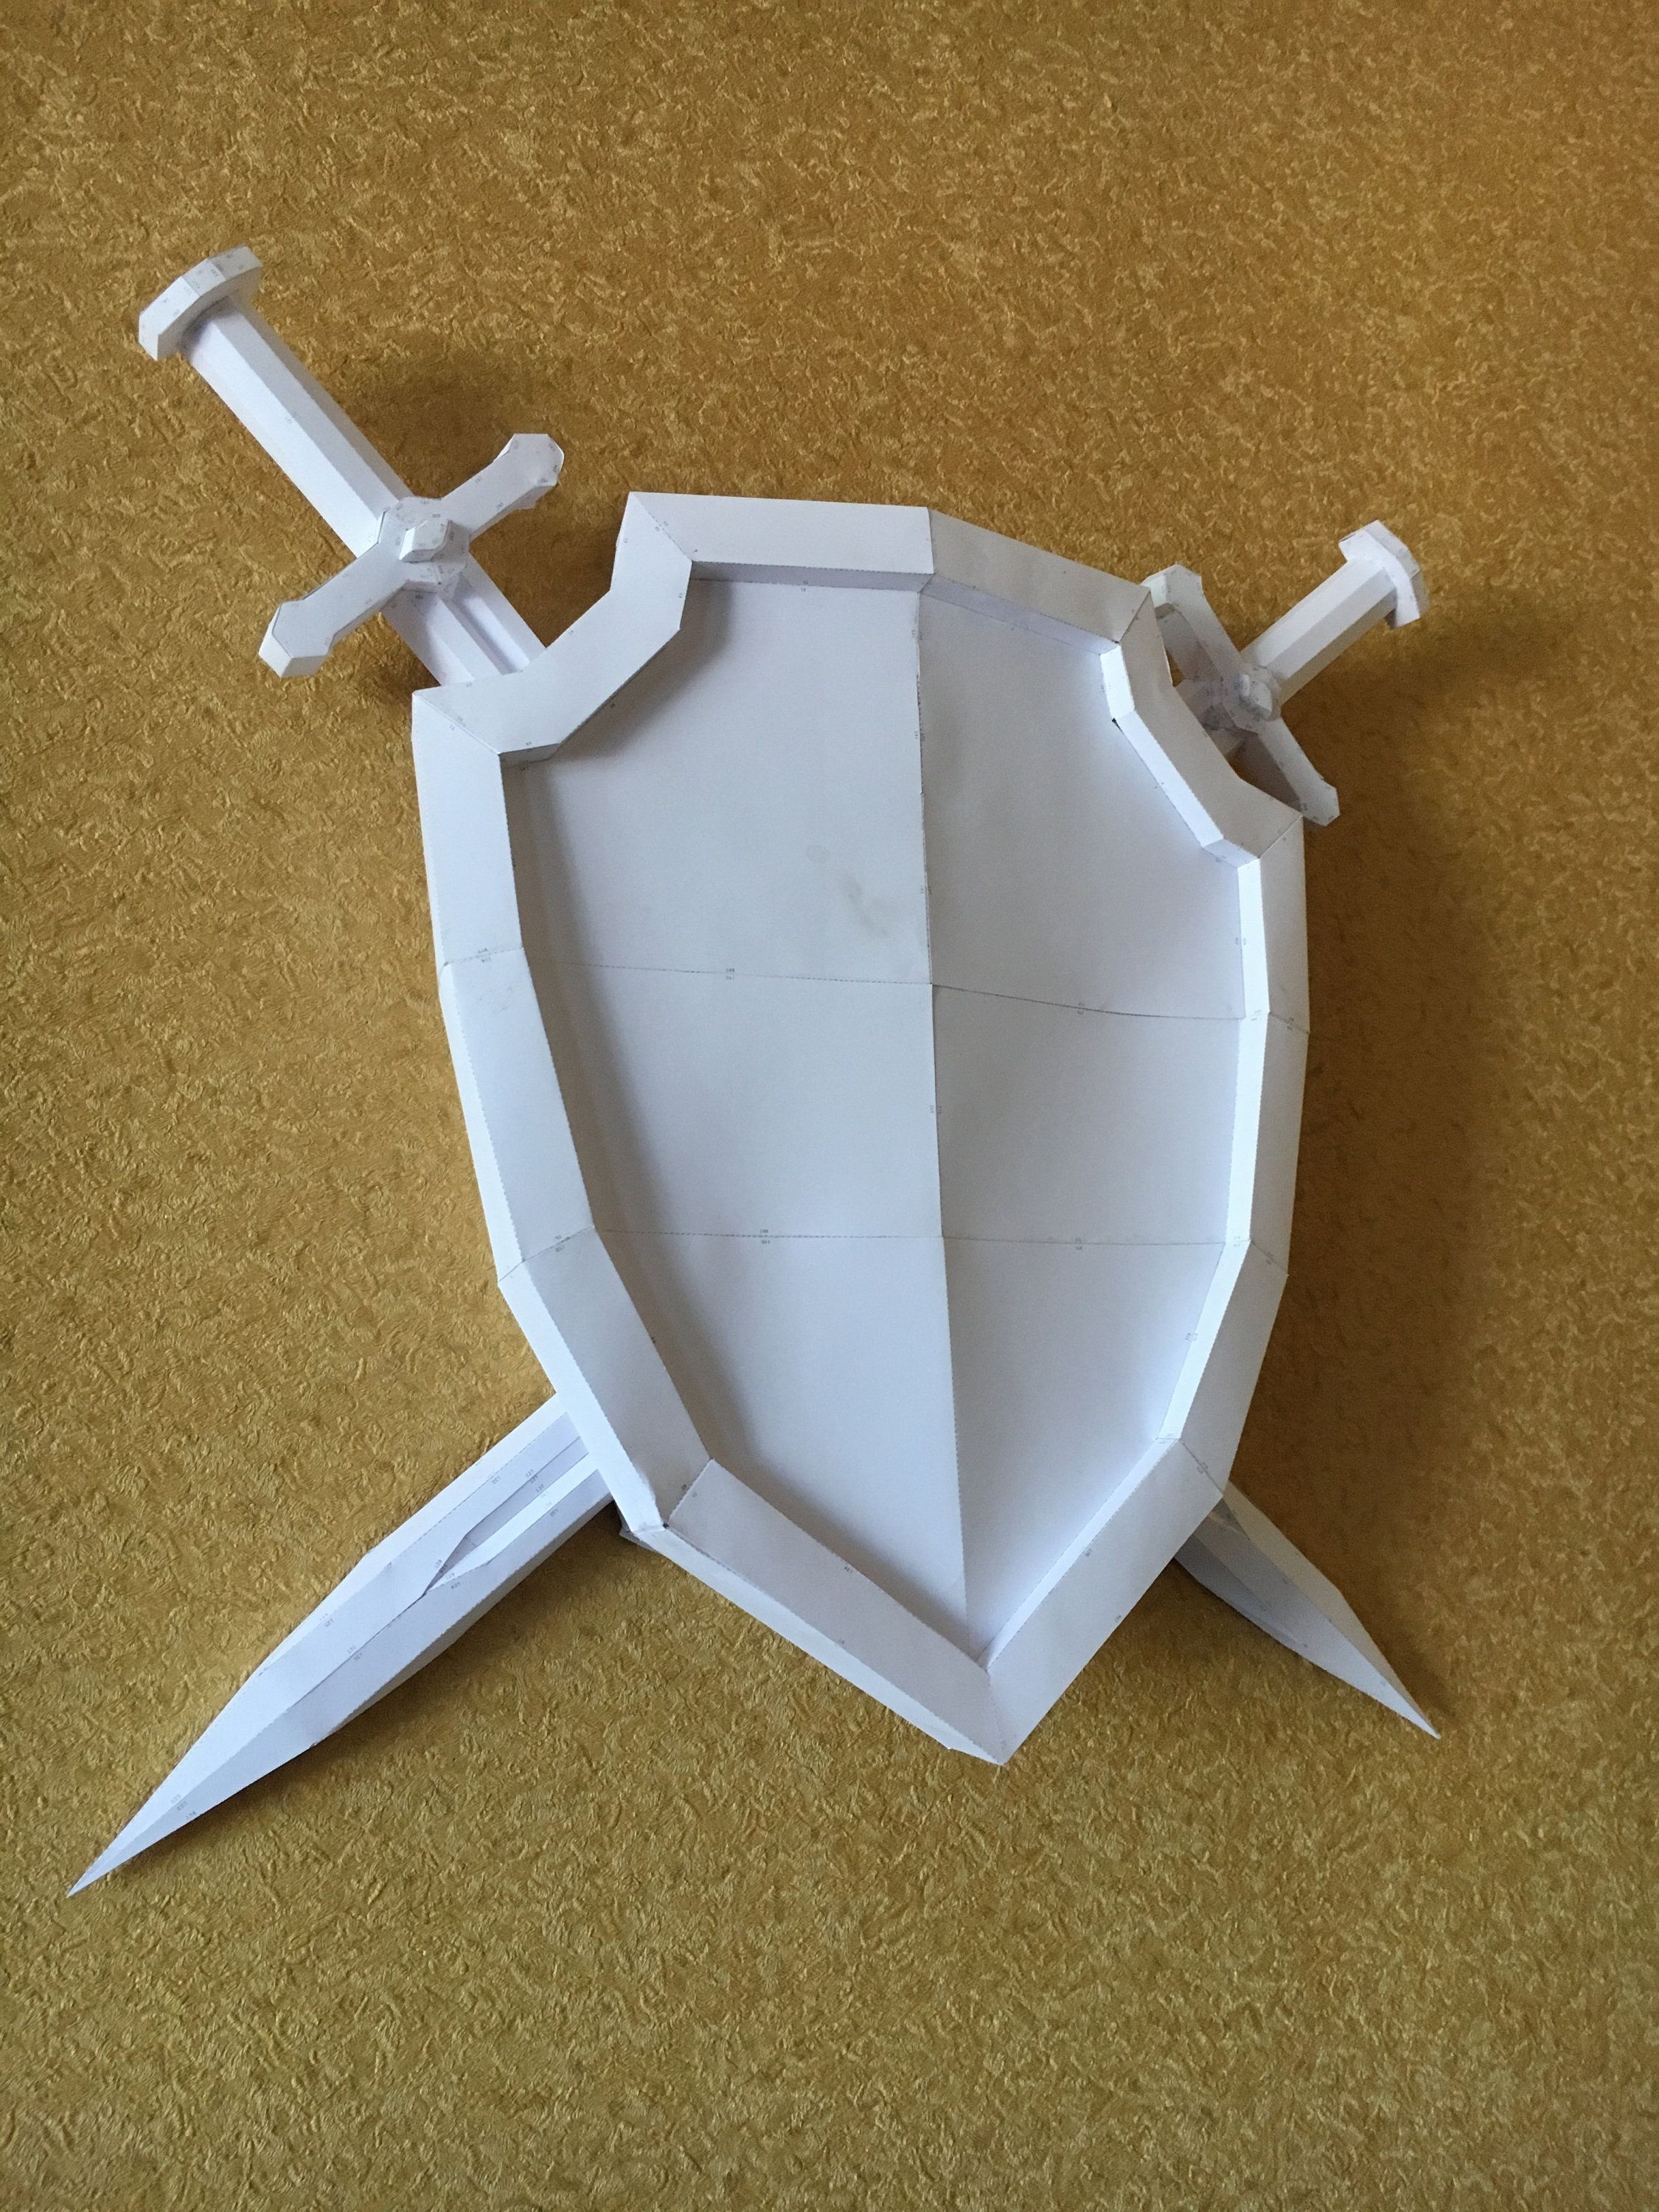 3d Model Papercraft Sword Shield Diy Papercraft Model ÐÑÐ¼Ð°Ð¶Ð½ÑÐµ Ð¸Ð·Ð´ÐµÐ Ð¸Ñ